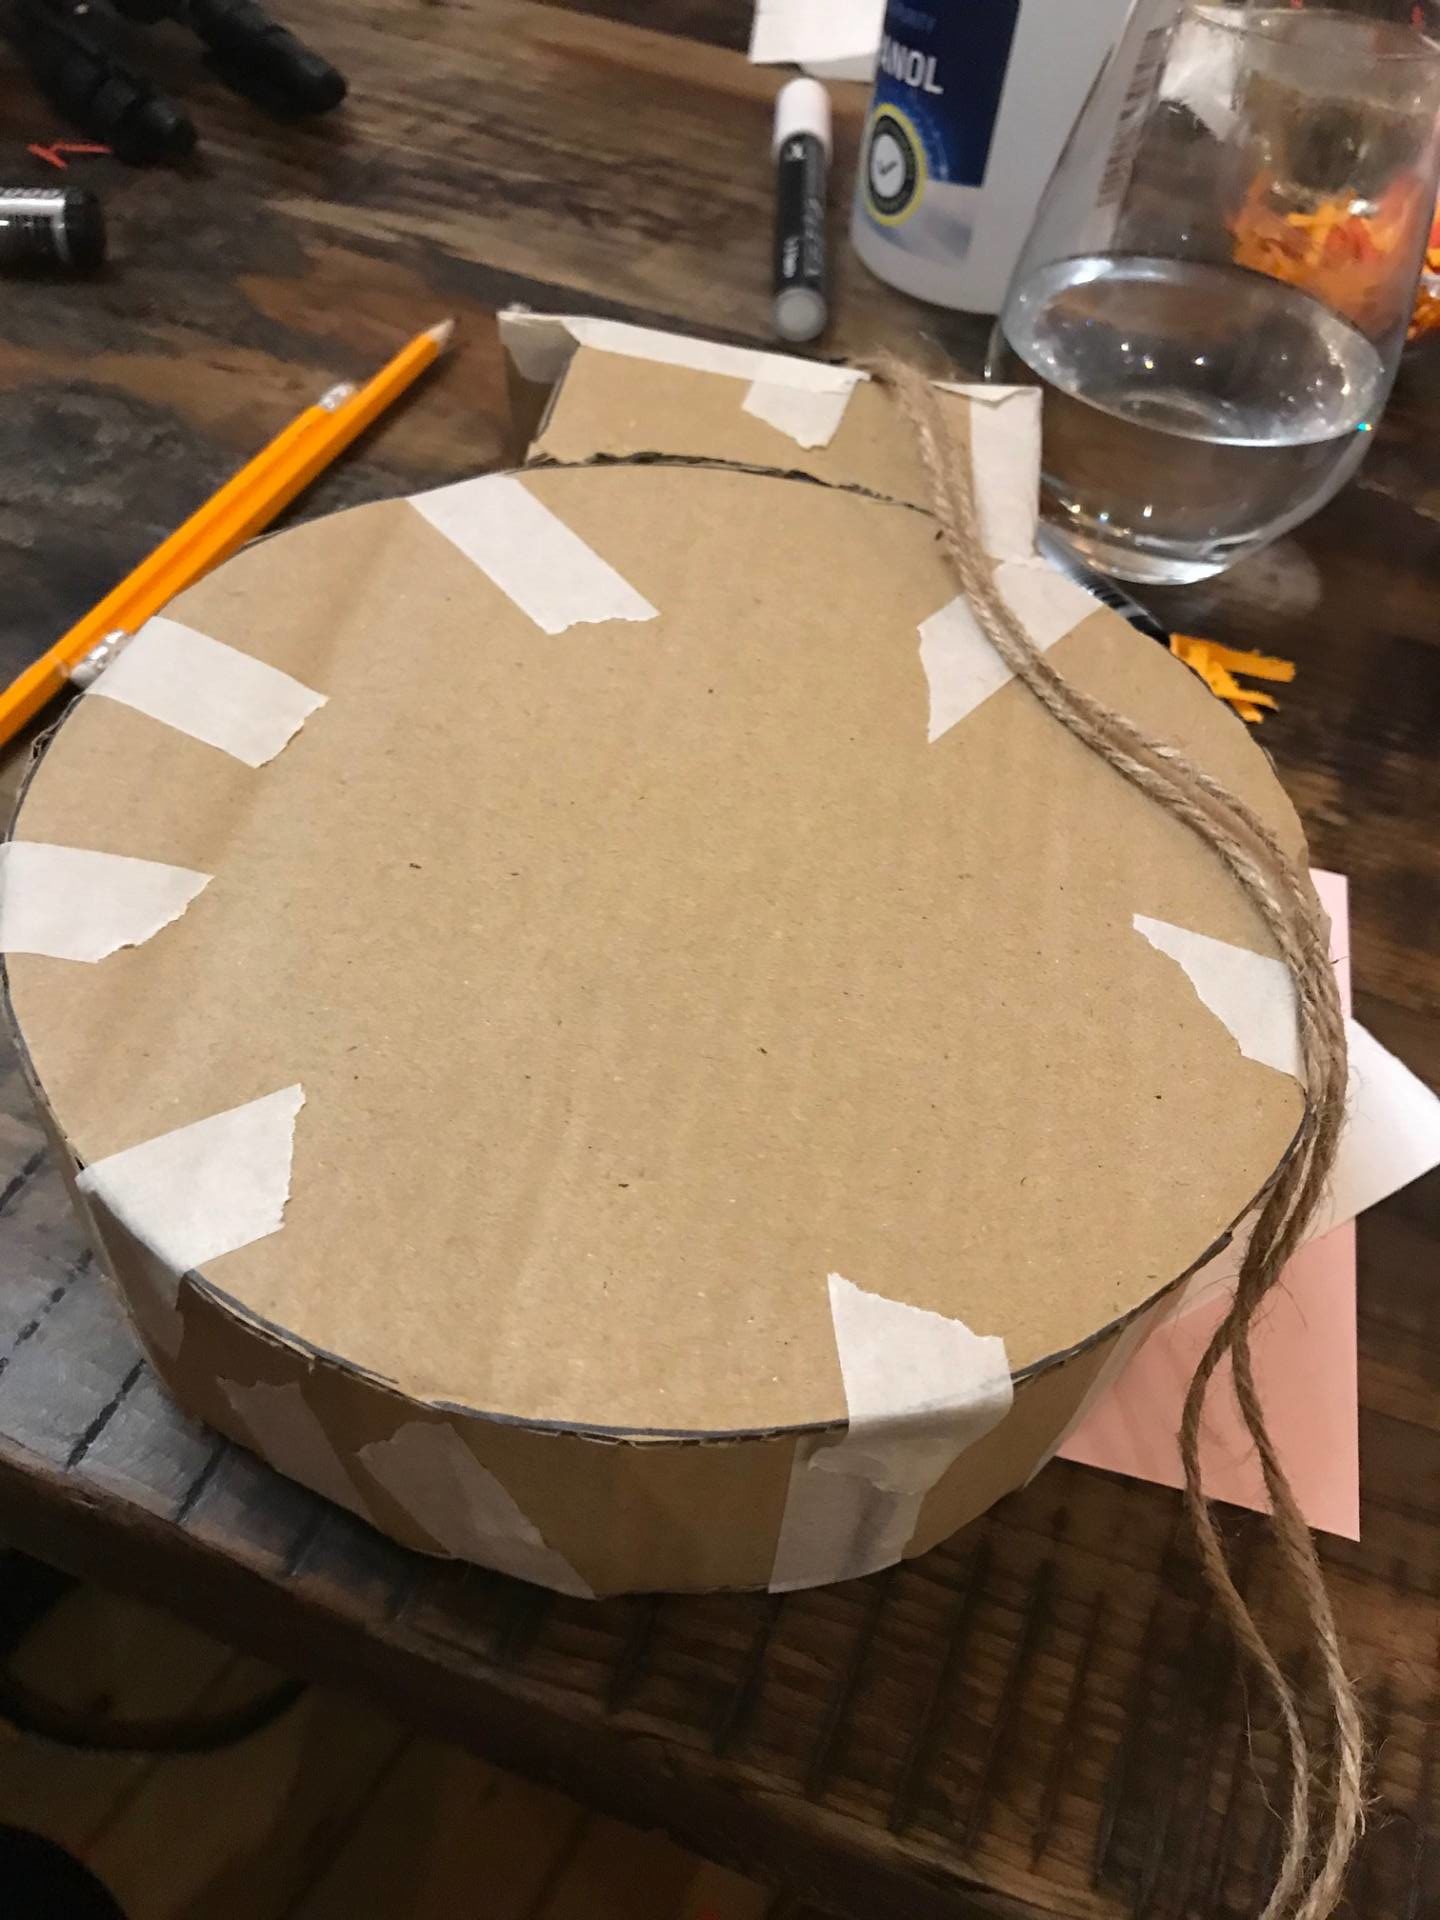 Cardboard for crafting